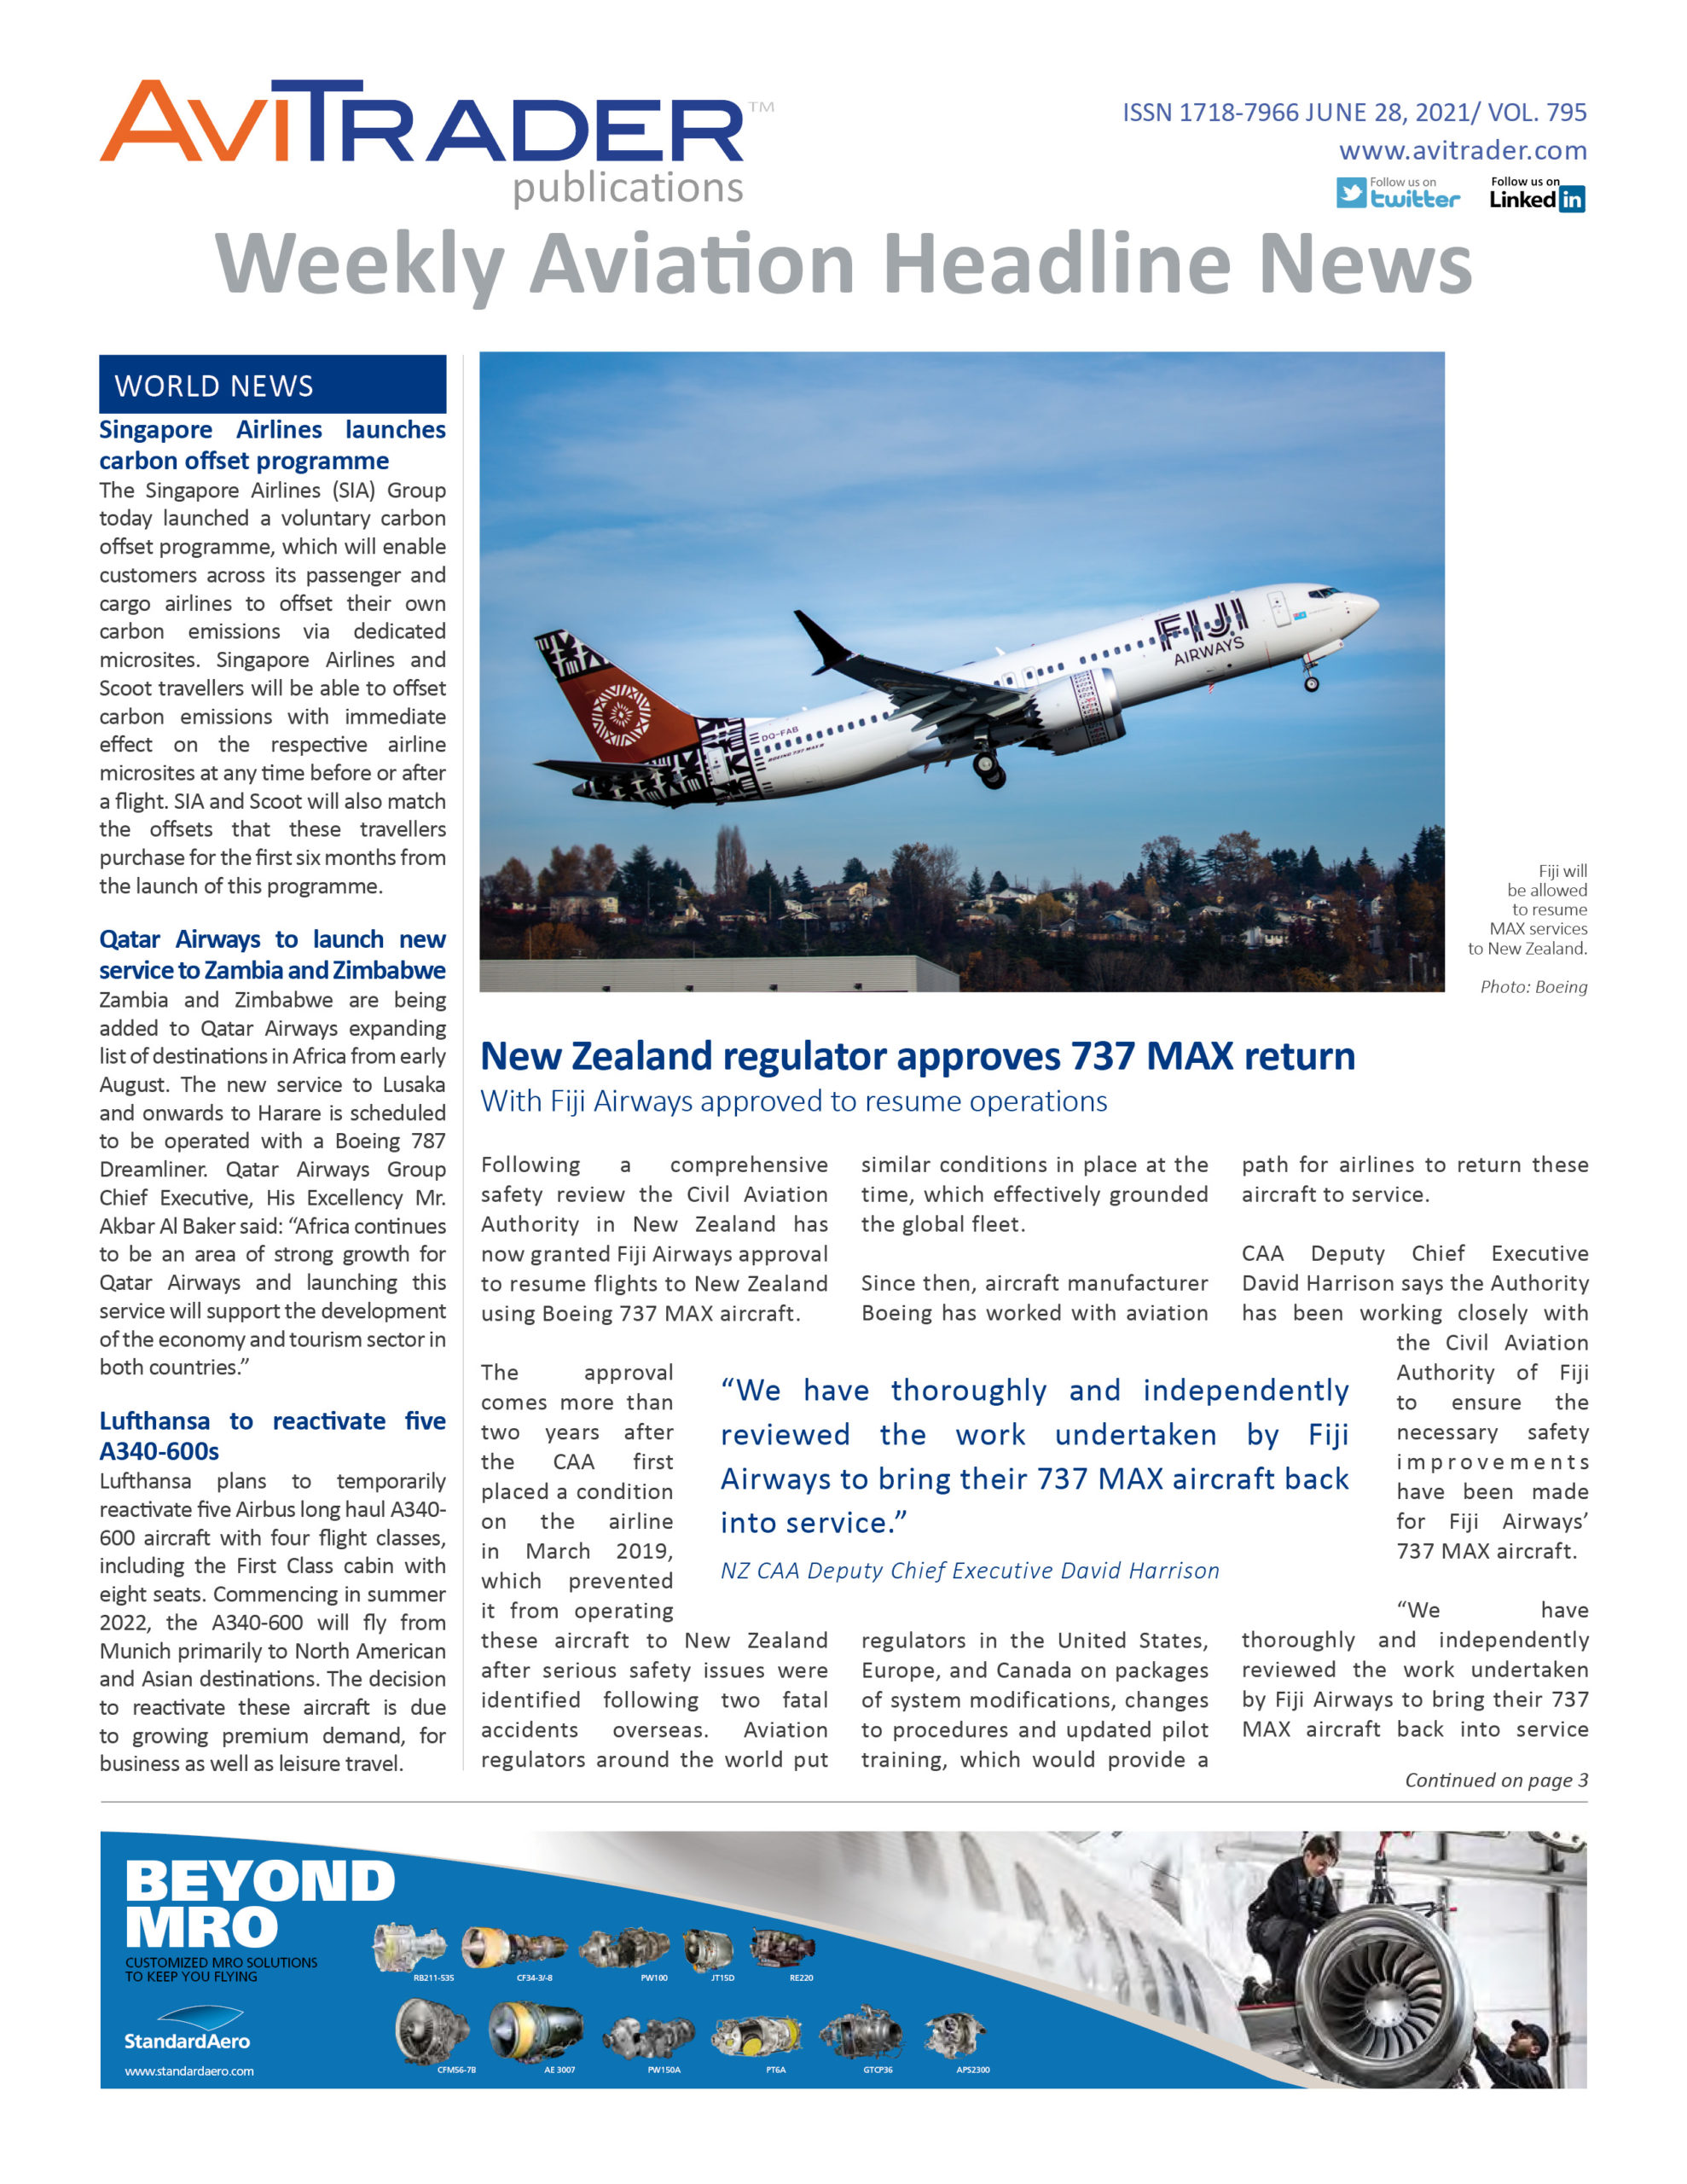 AviTrader_Weekly_Headline_News_Cover_2021-06-28